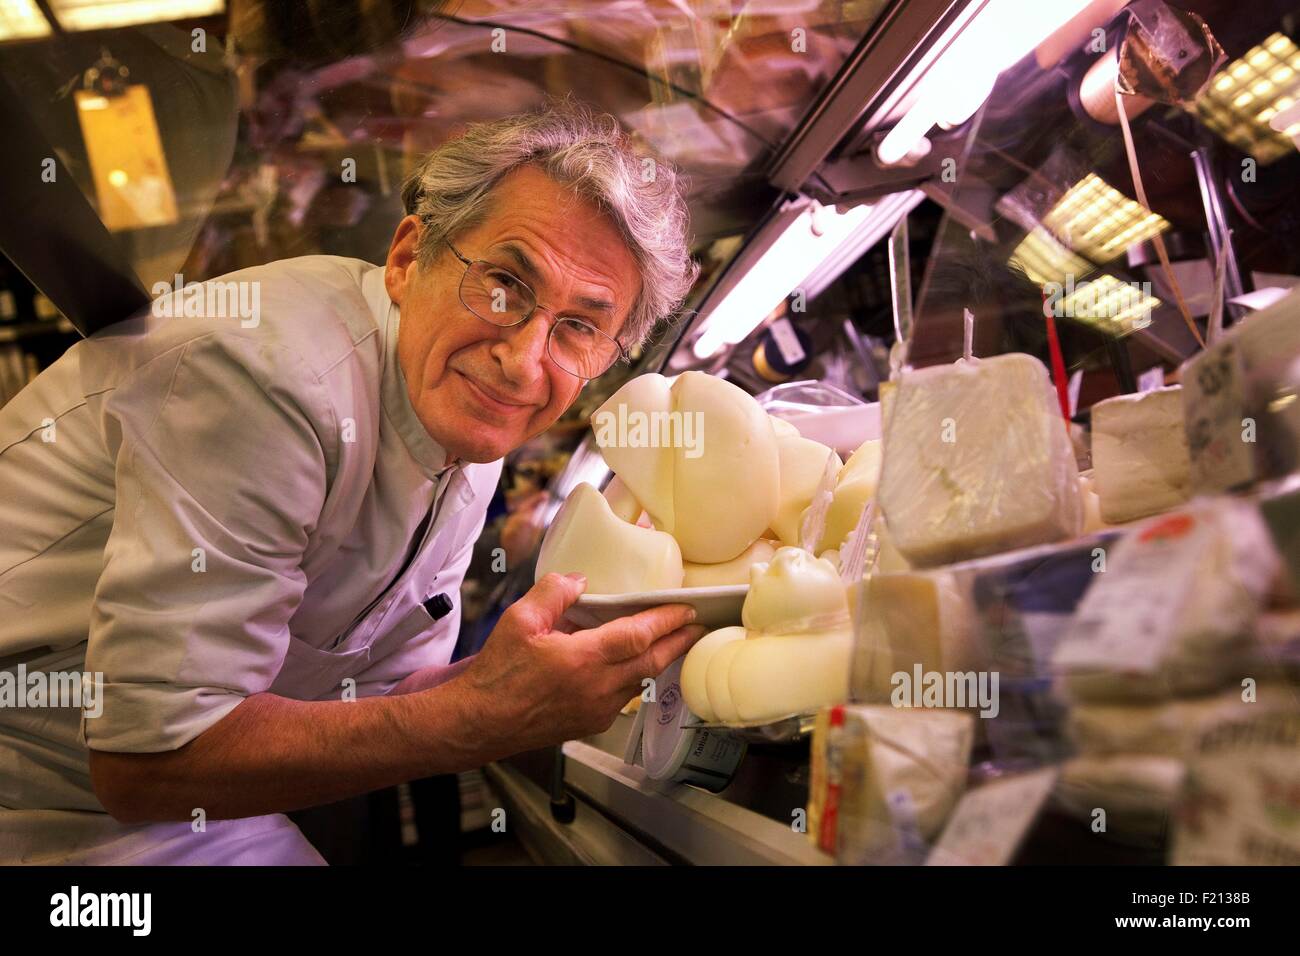 Italy, Latium, Rome, Alimentari Volpetti, Via Marmorata, 47, Volpetti's Grocery's owner Mr, Claudio Volpetti dealing with a cheese Stock Photo